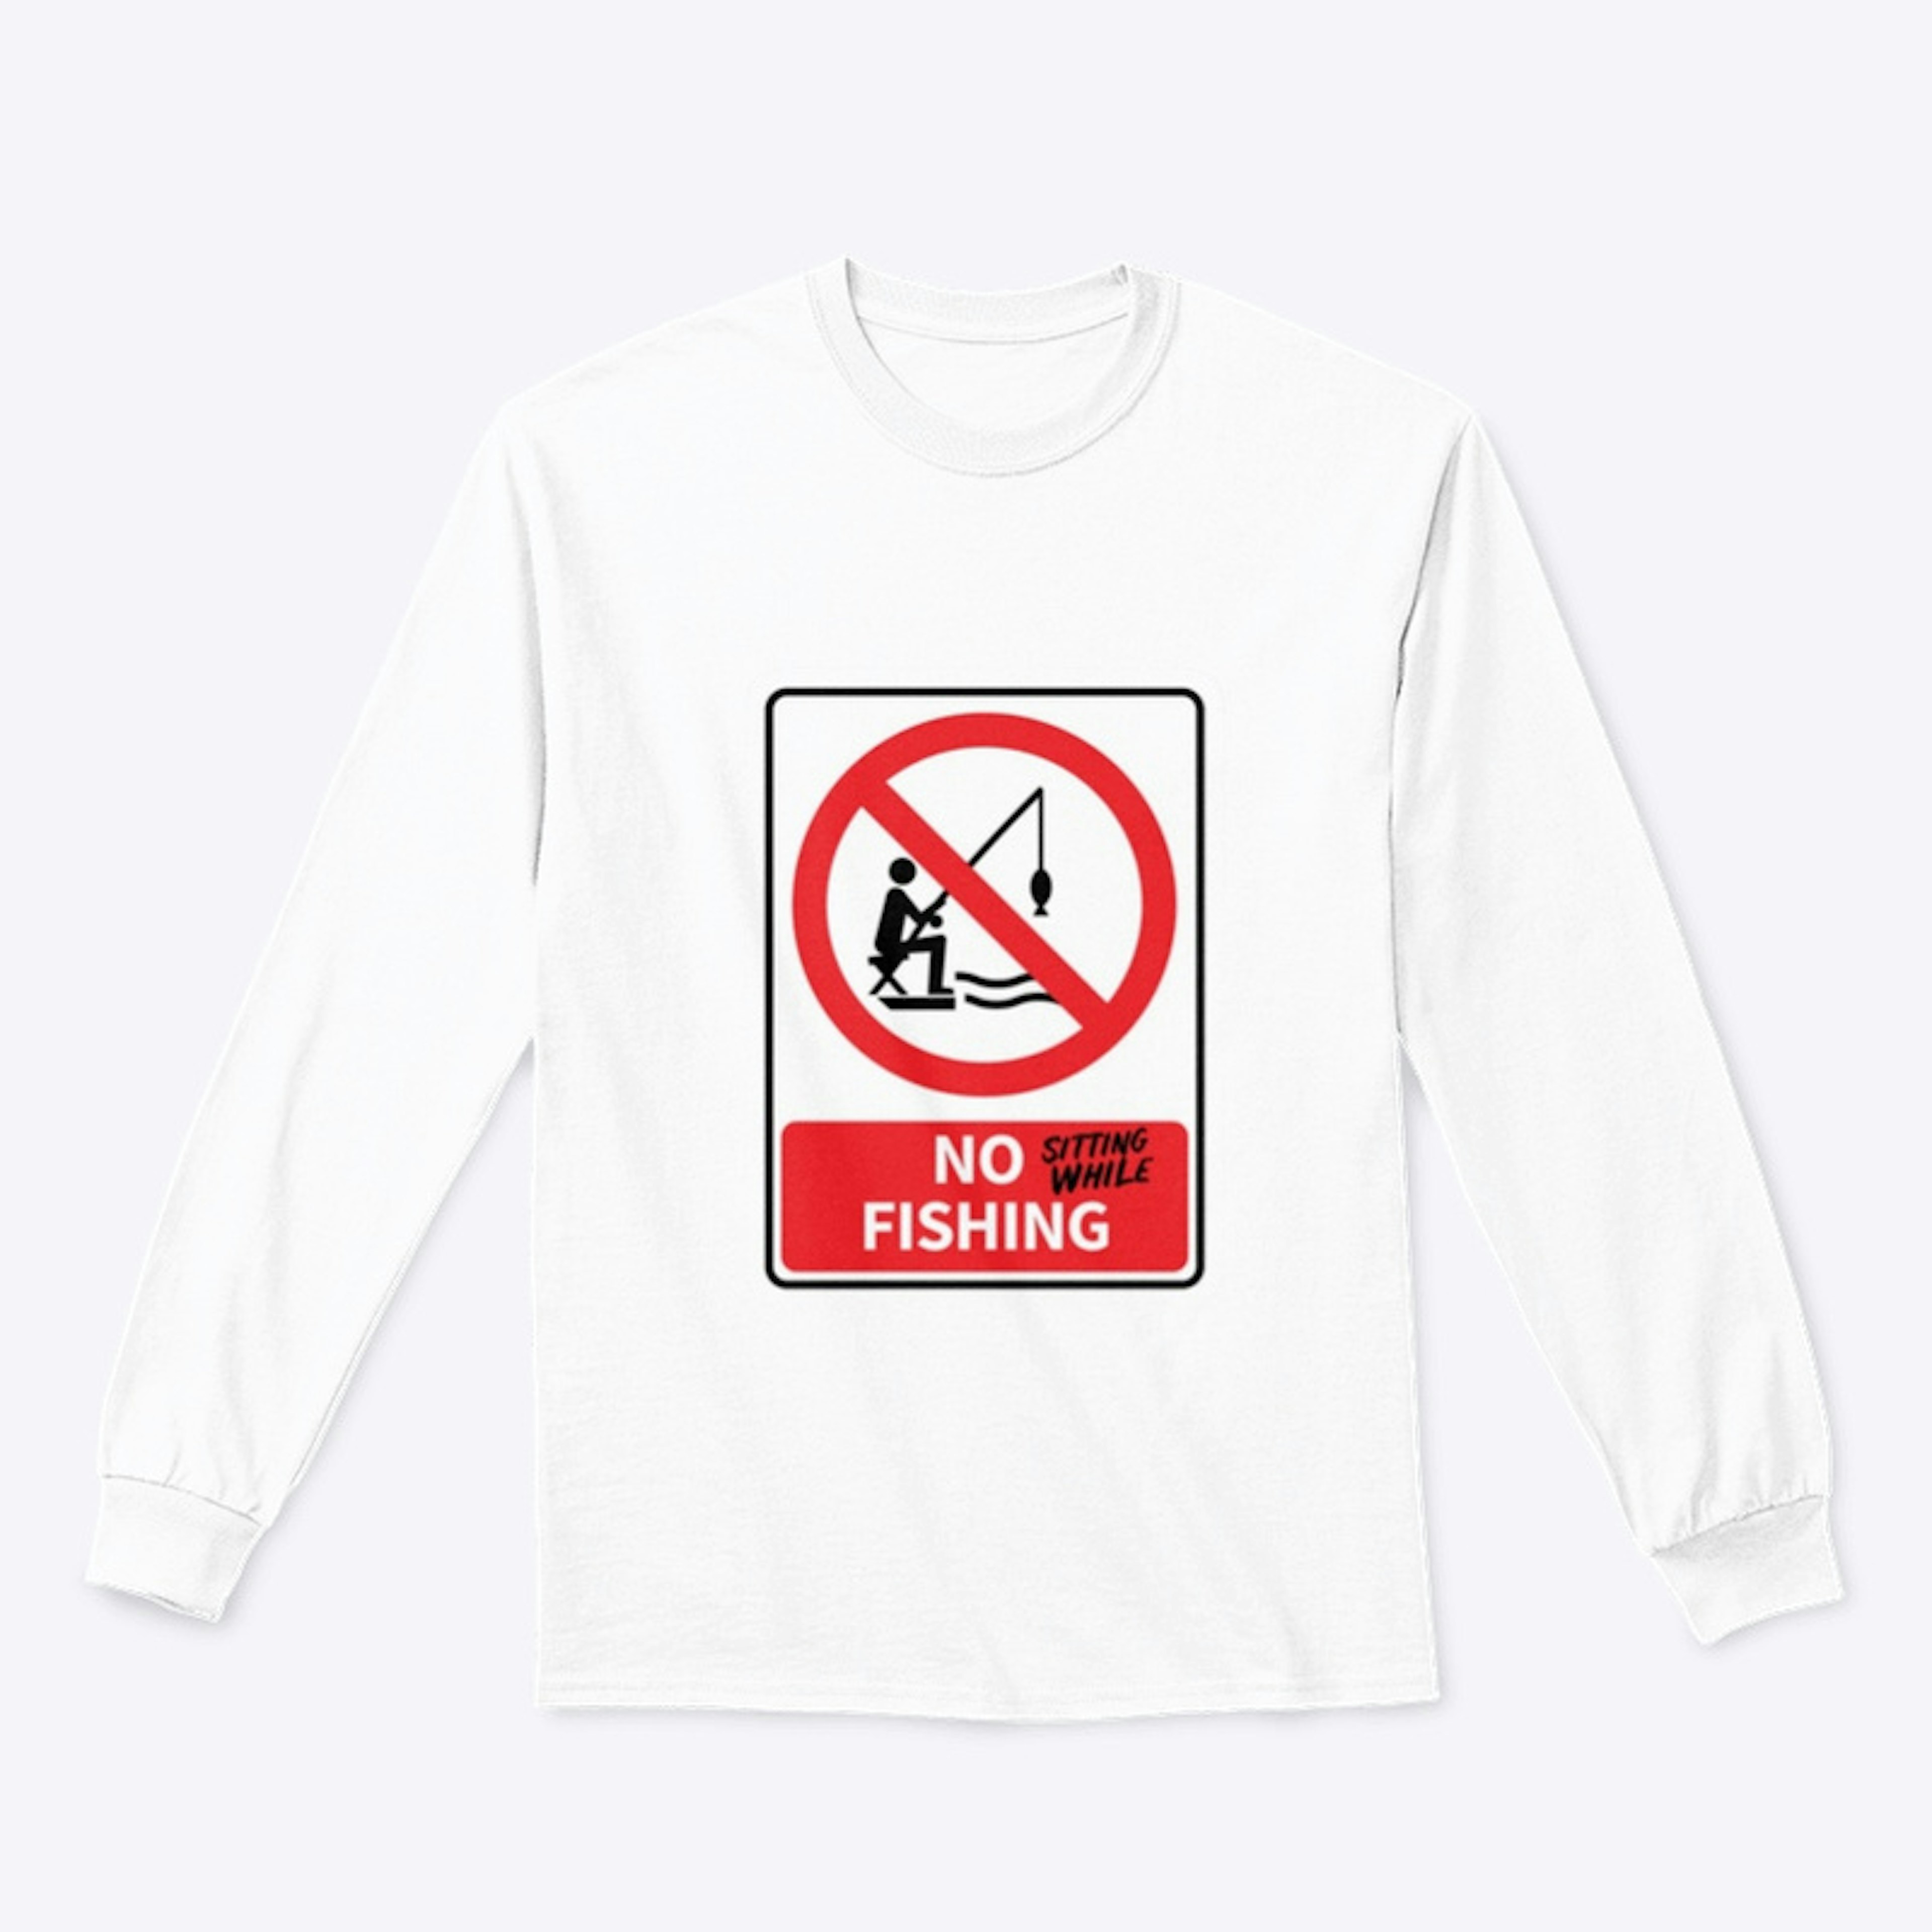 NO sitting while FISHING 